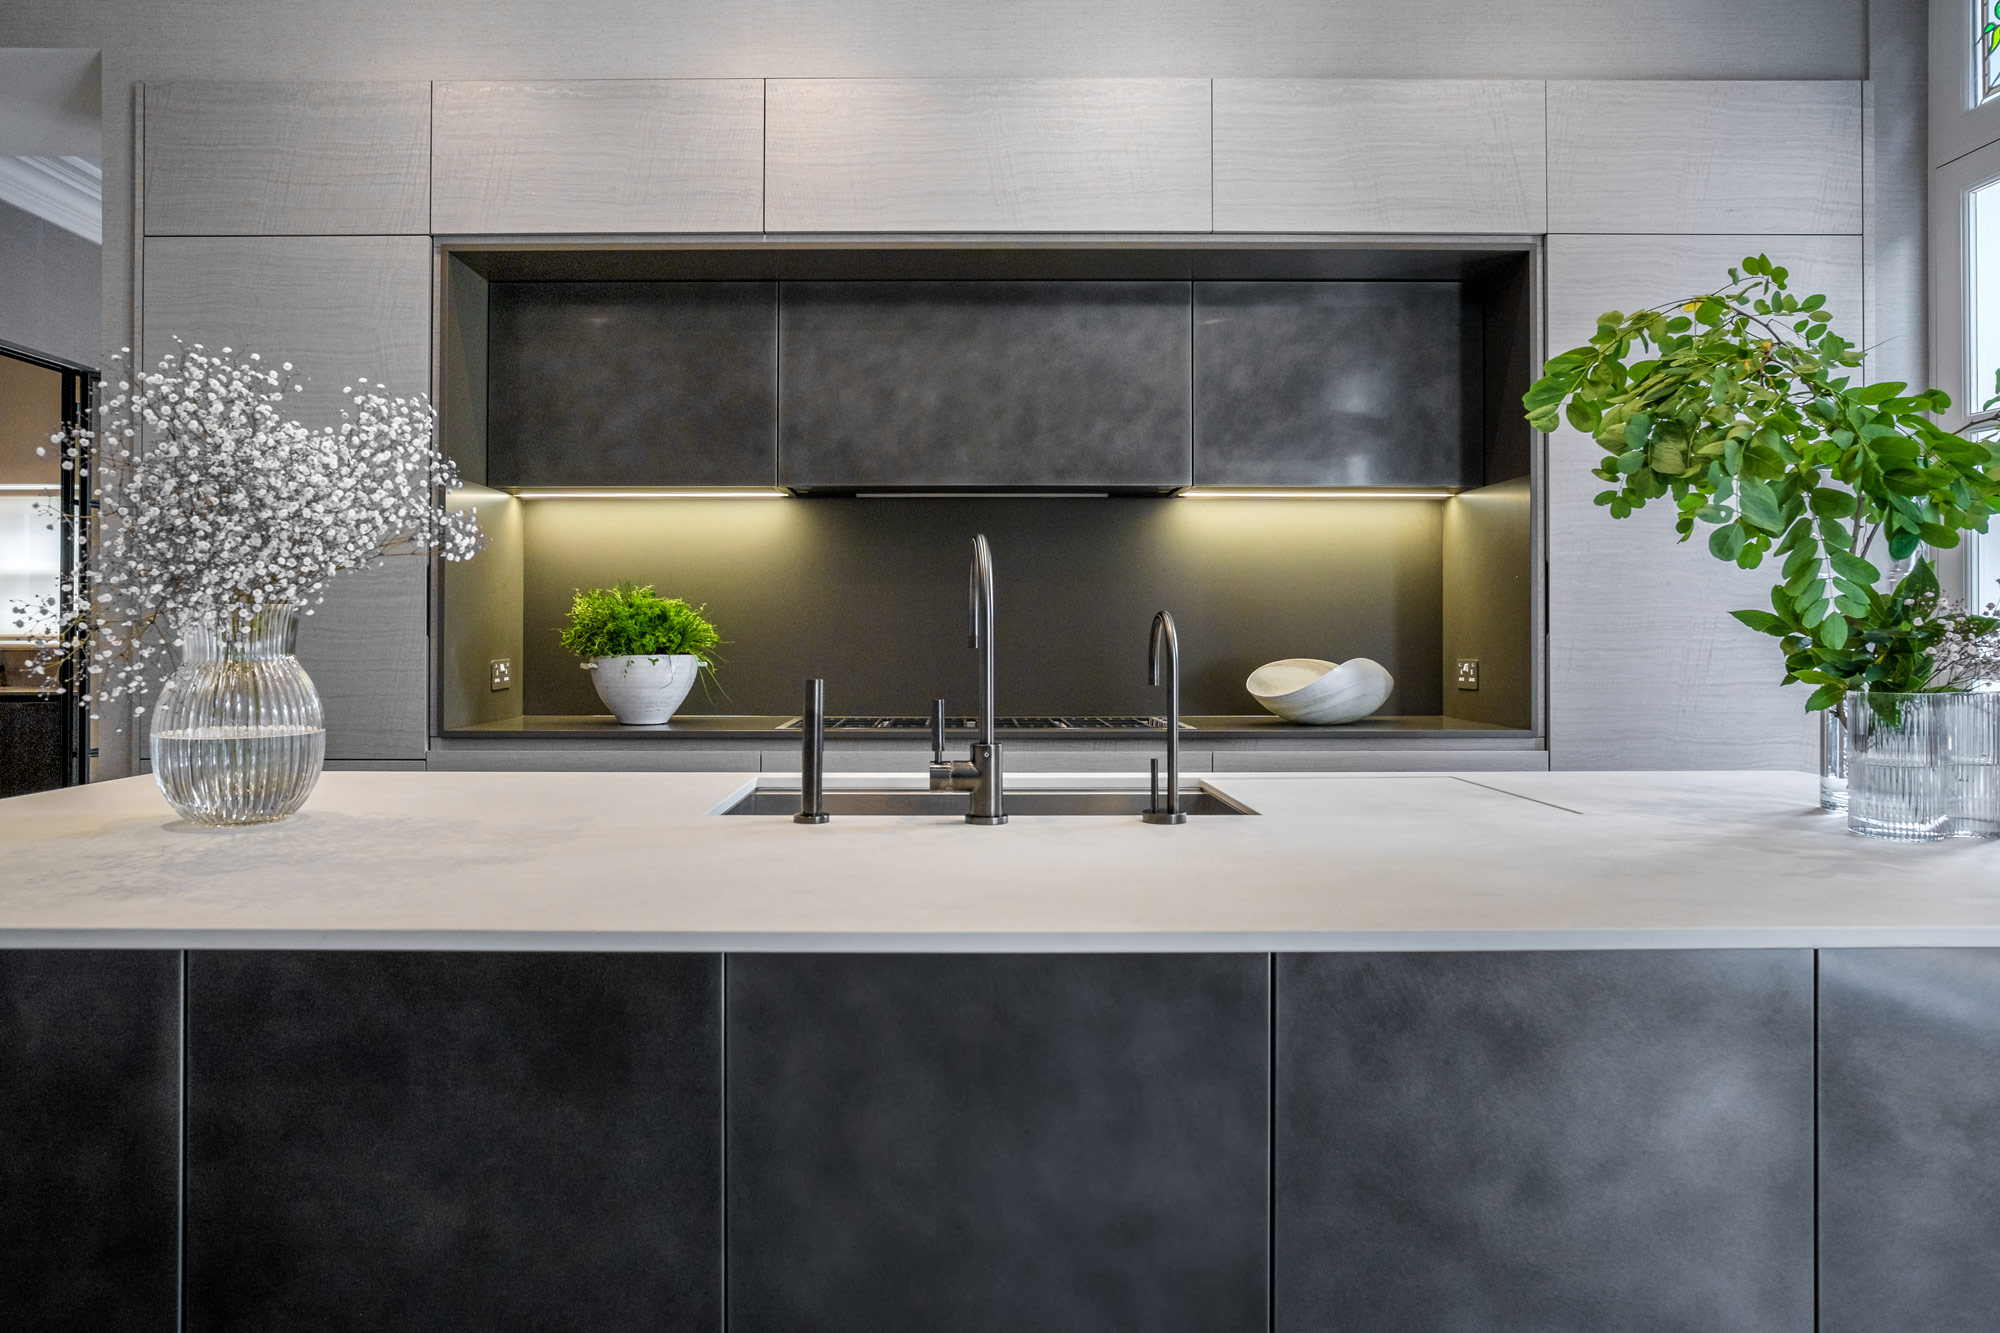 Fontana designed this Bespoke kitchen london for a home in Belsize Park NW3 | Design as Art | interior architectural design studio portfolio